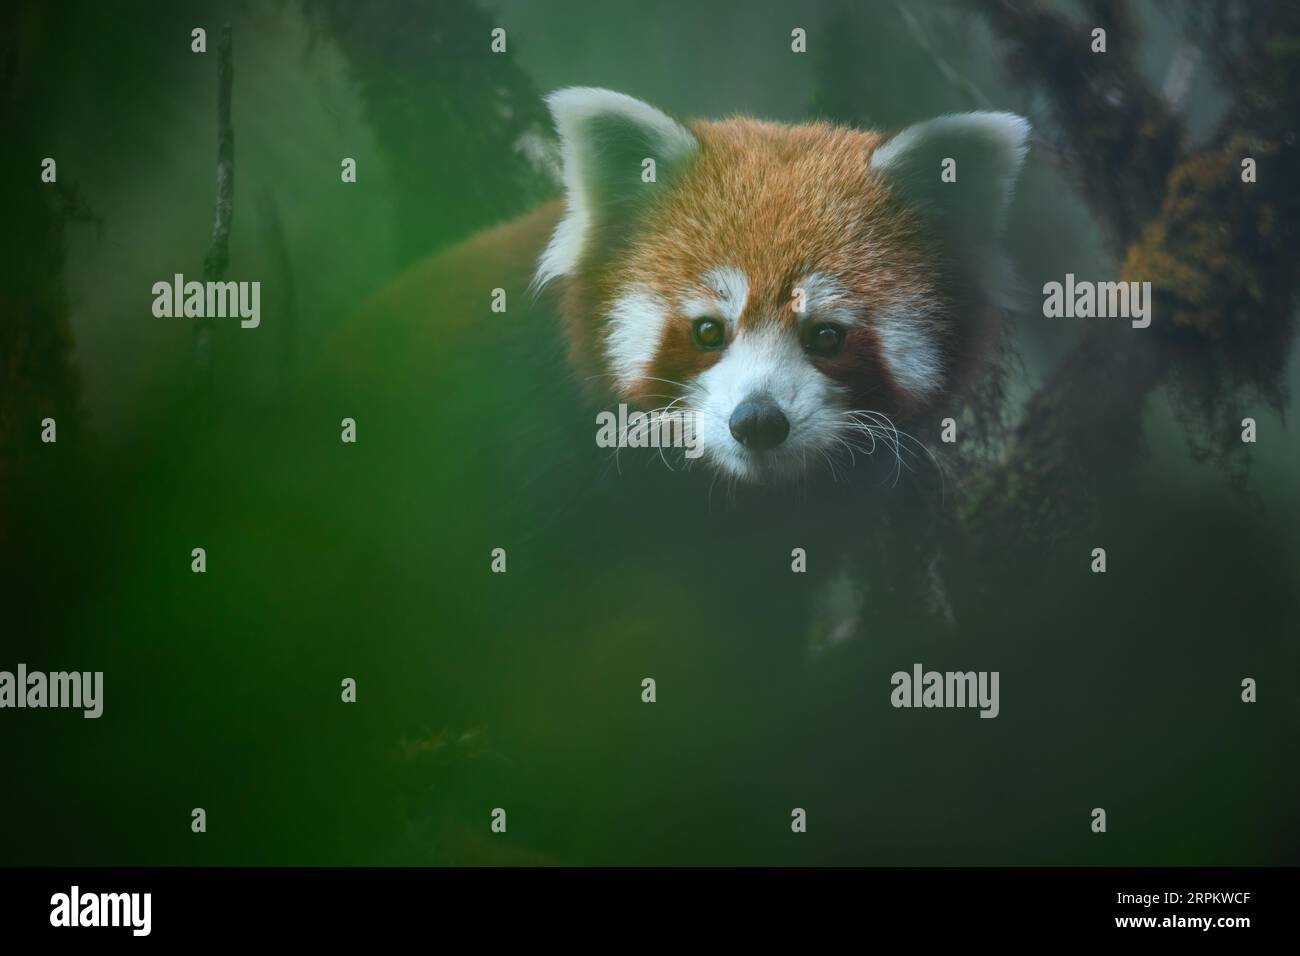 Creative portrait of red panda peering through vegetation on top of an oaknut tree Stock Photo